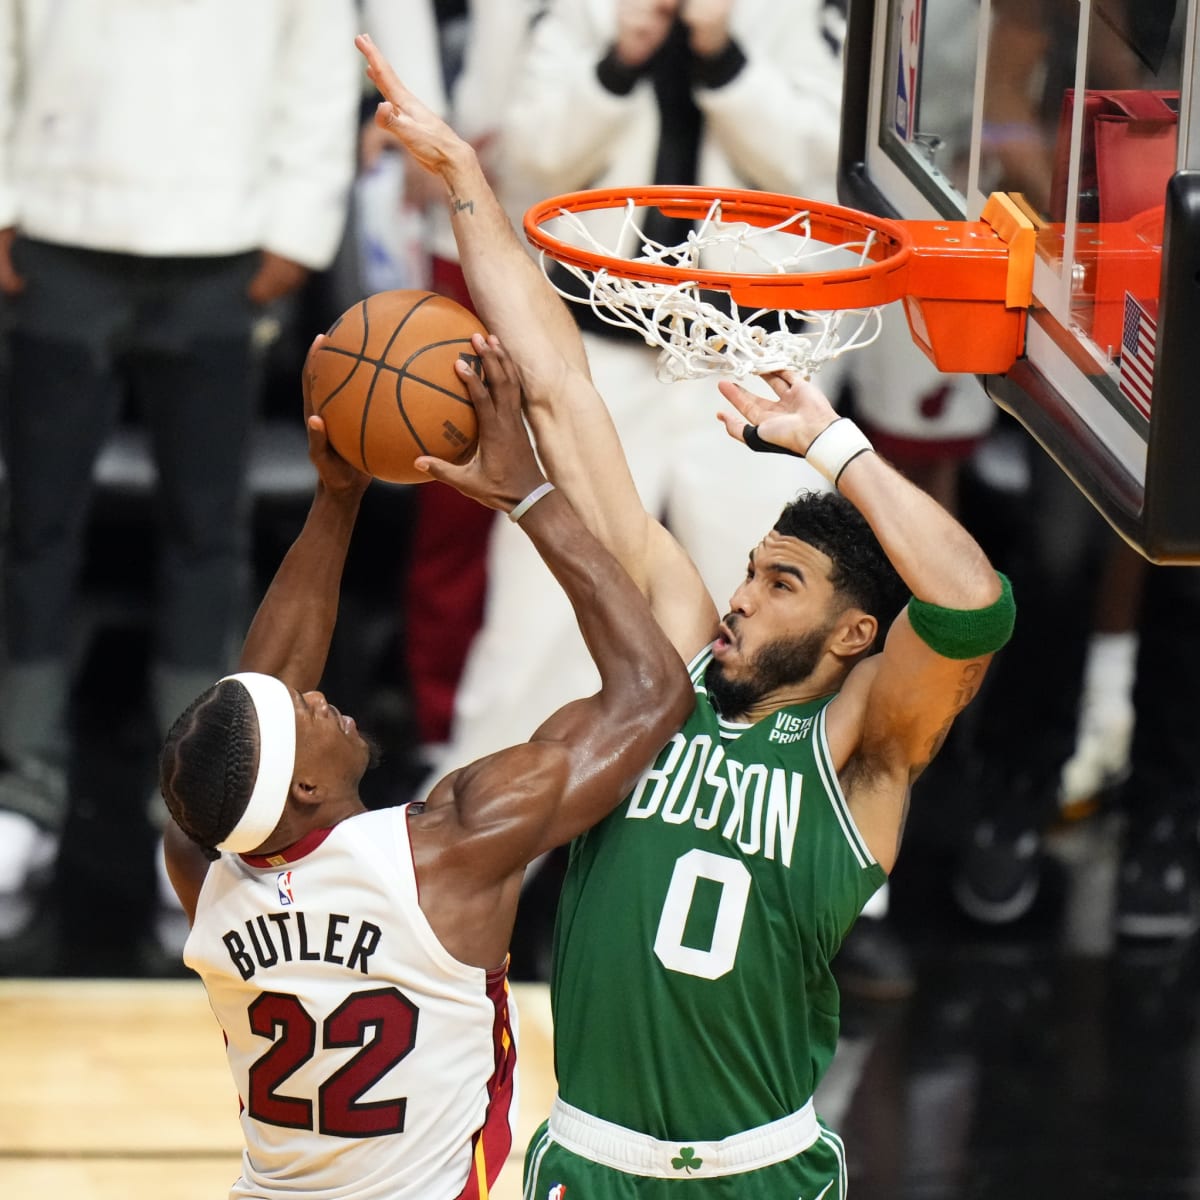 An analysis of Monday night's Miami Heat-Boston Celtics